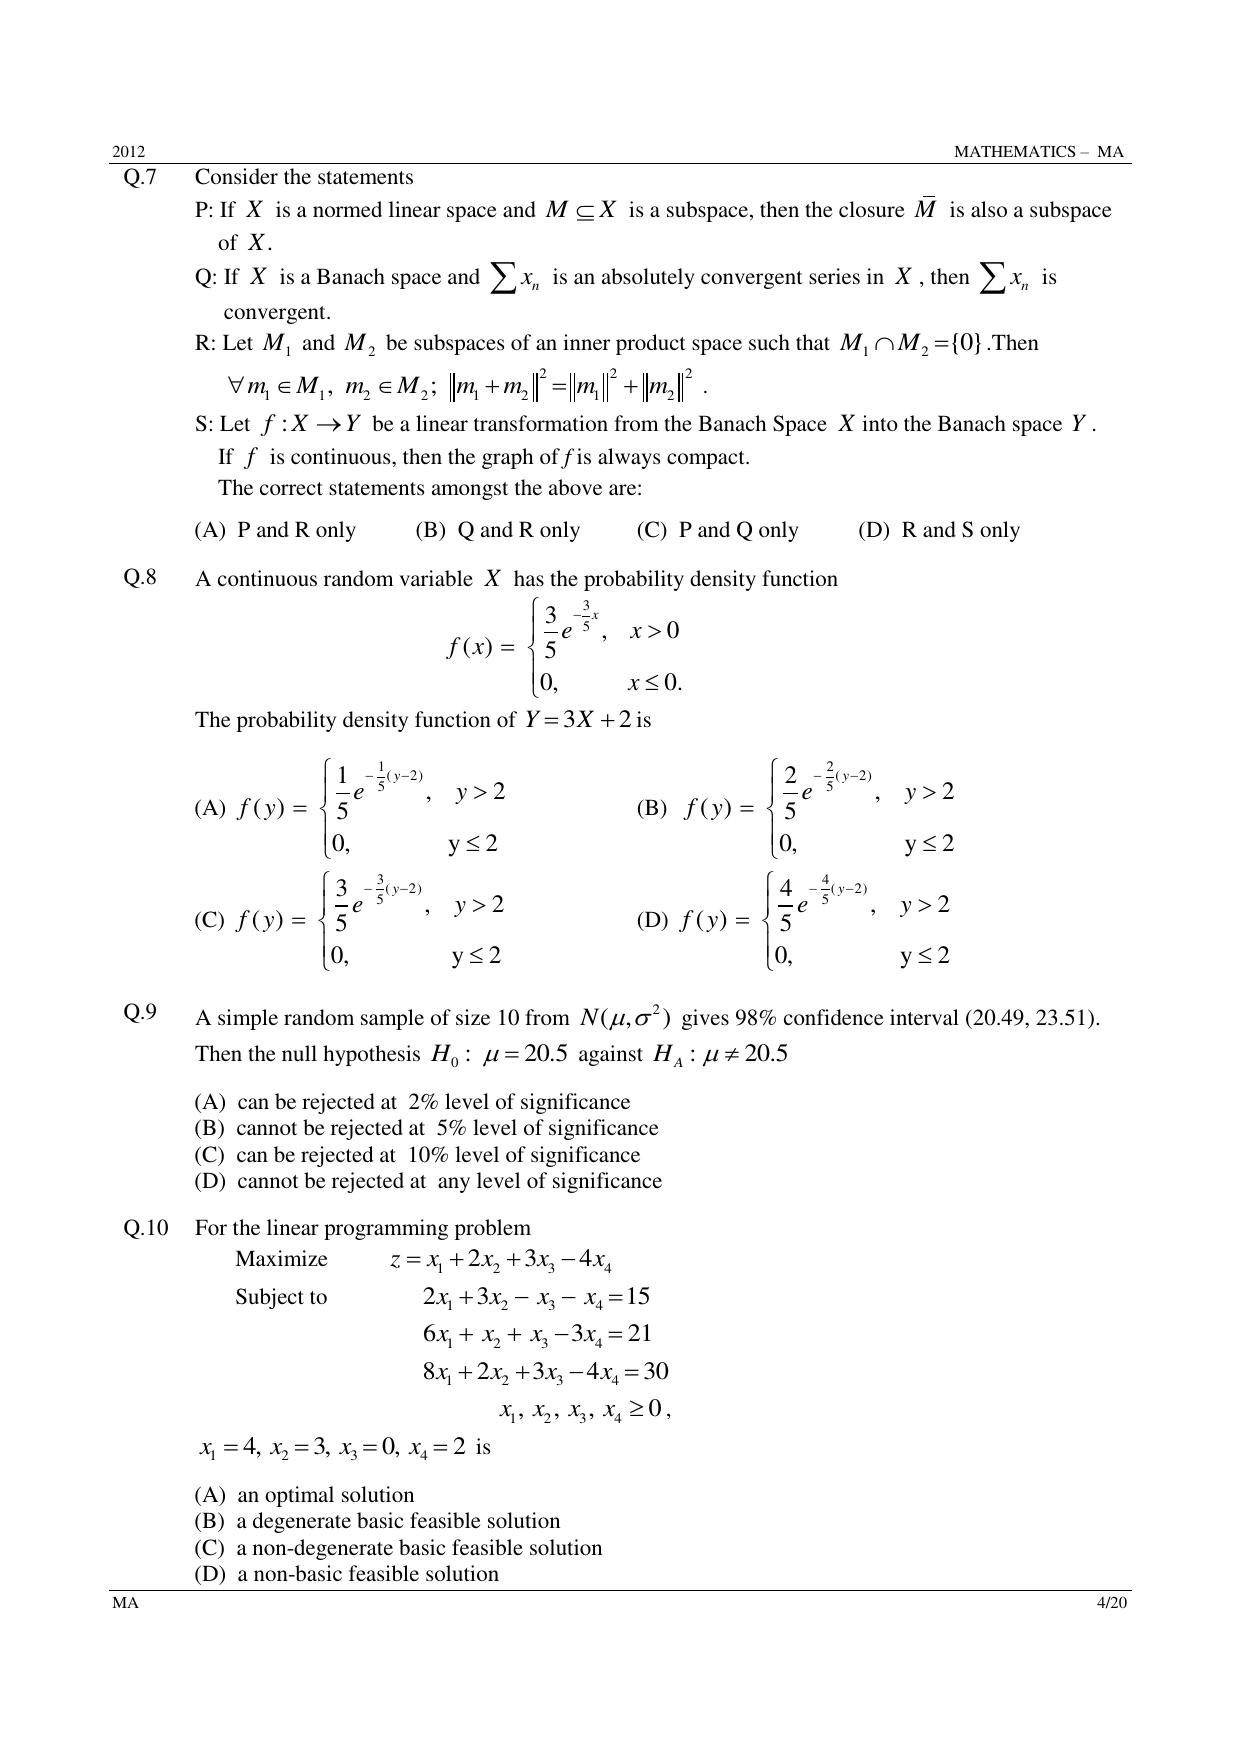 GATE 2012 Mathematics (MA) Question Paper with Answer Key - Page 4